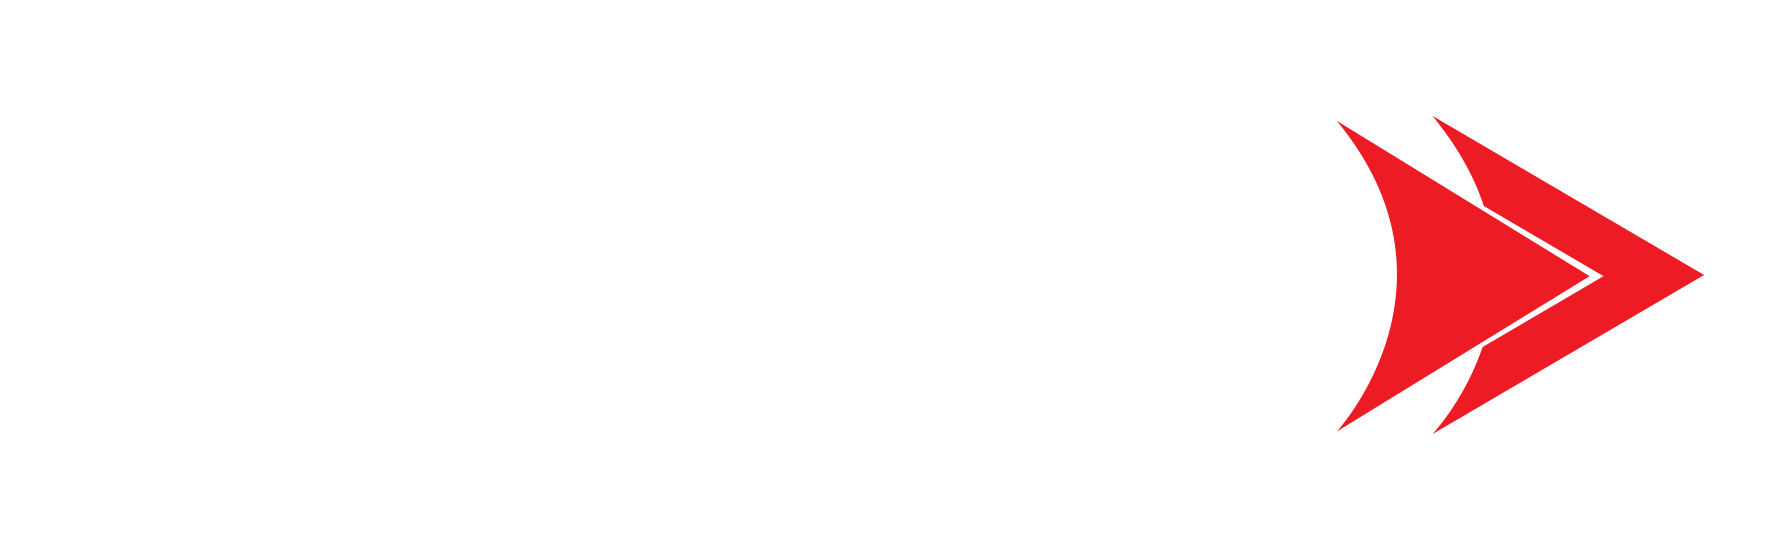 Delgado Travel